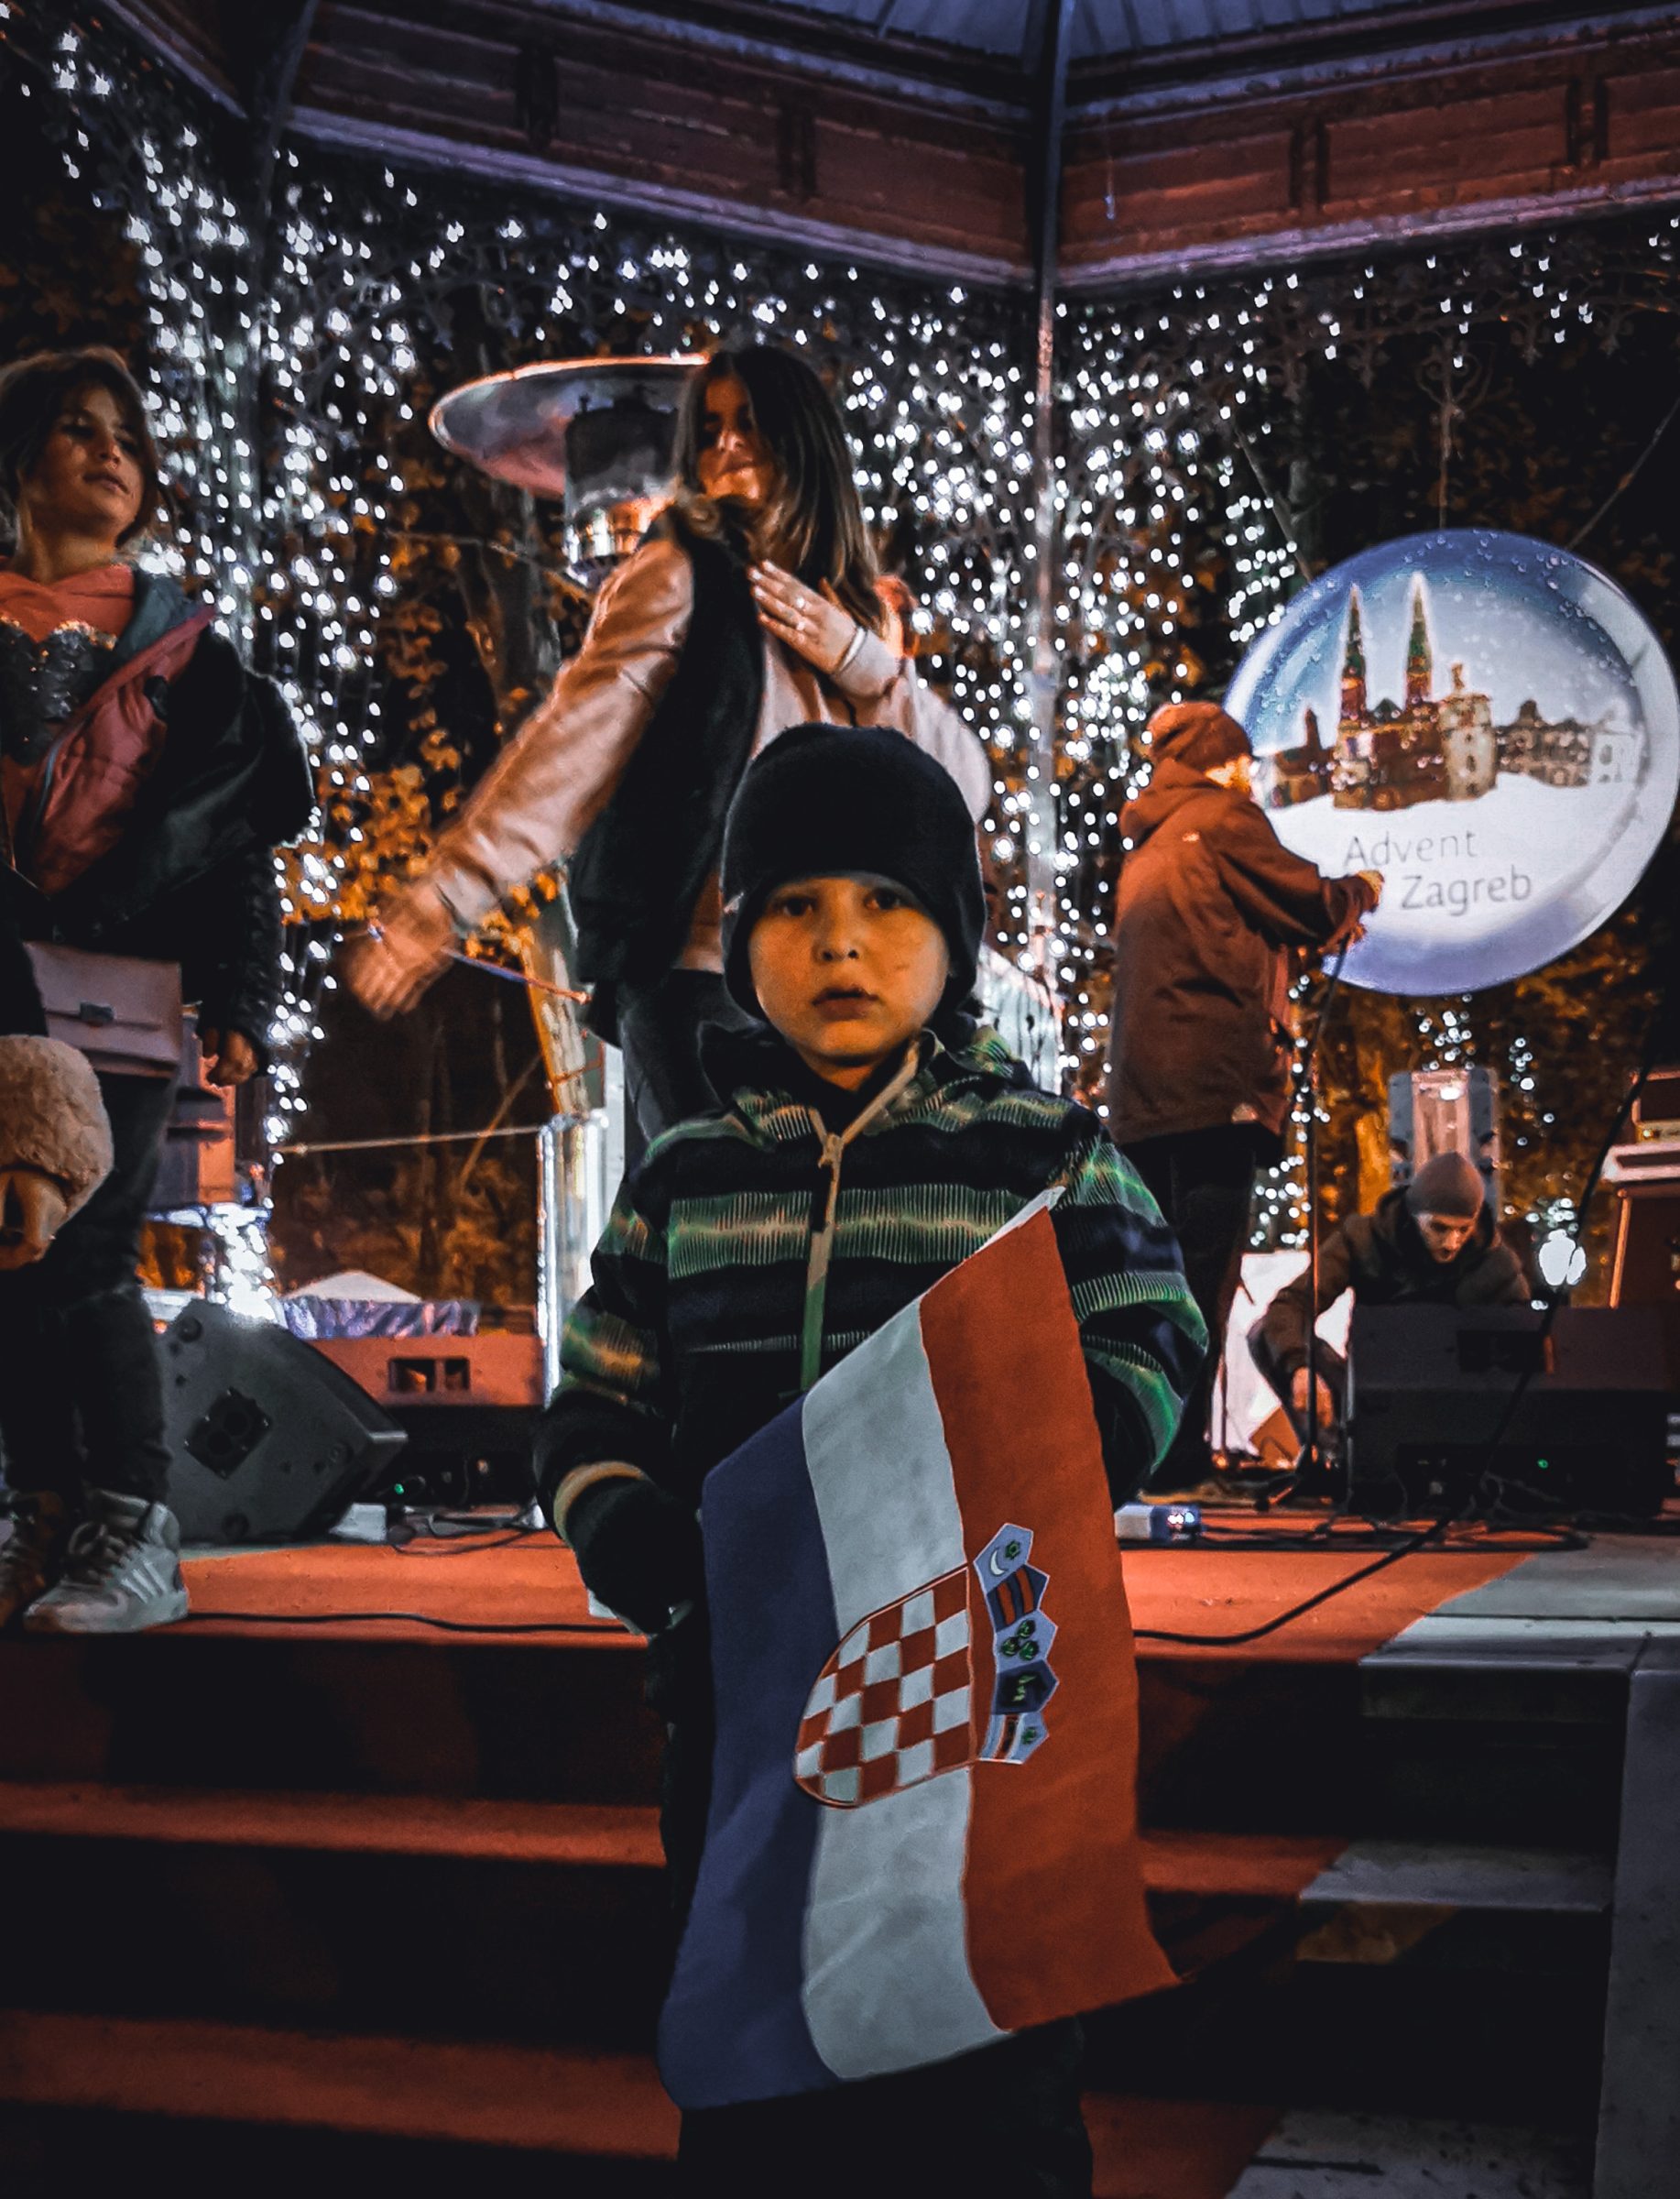 Advent Zagreb | Kind met de vlag van kroatië in Zrinjevac Park